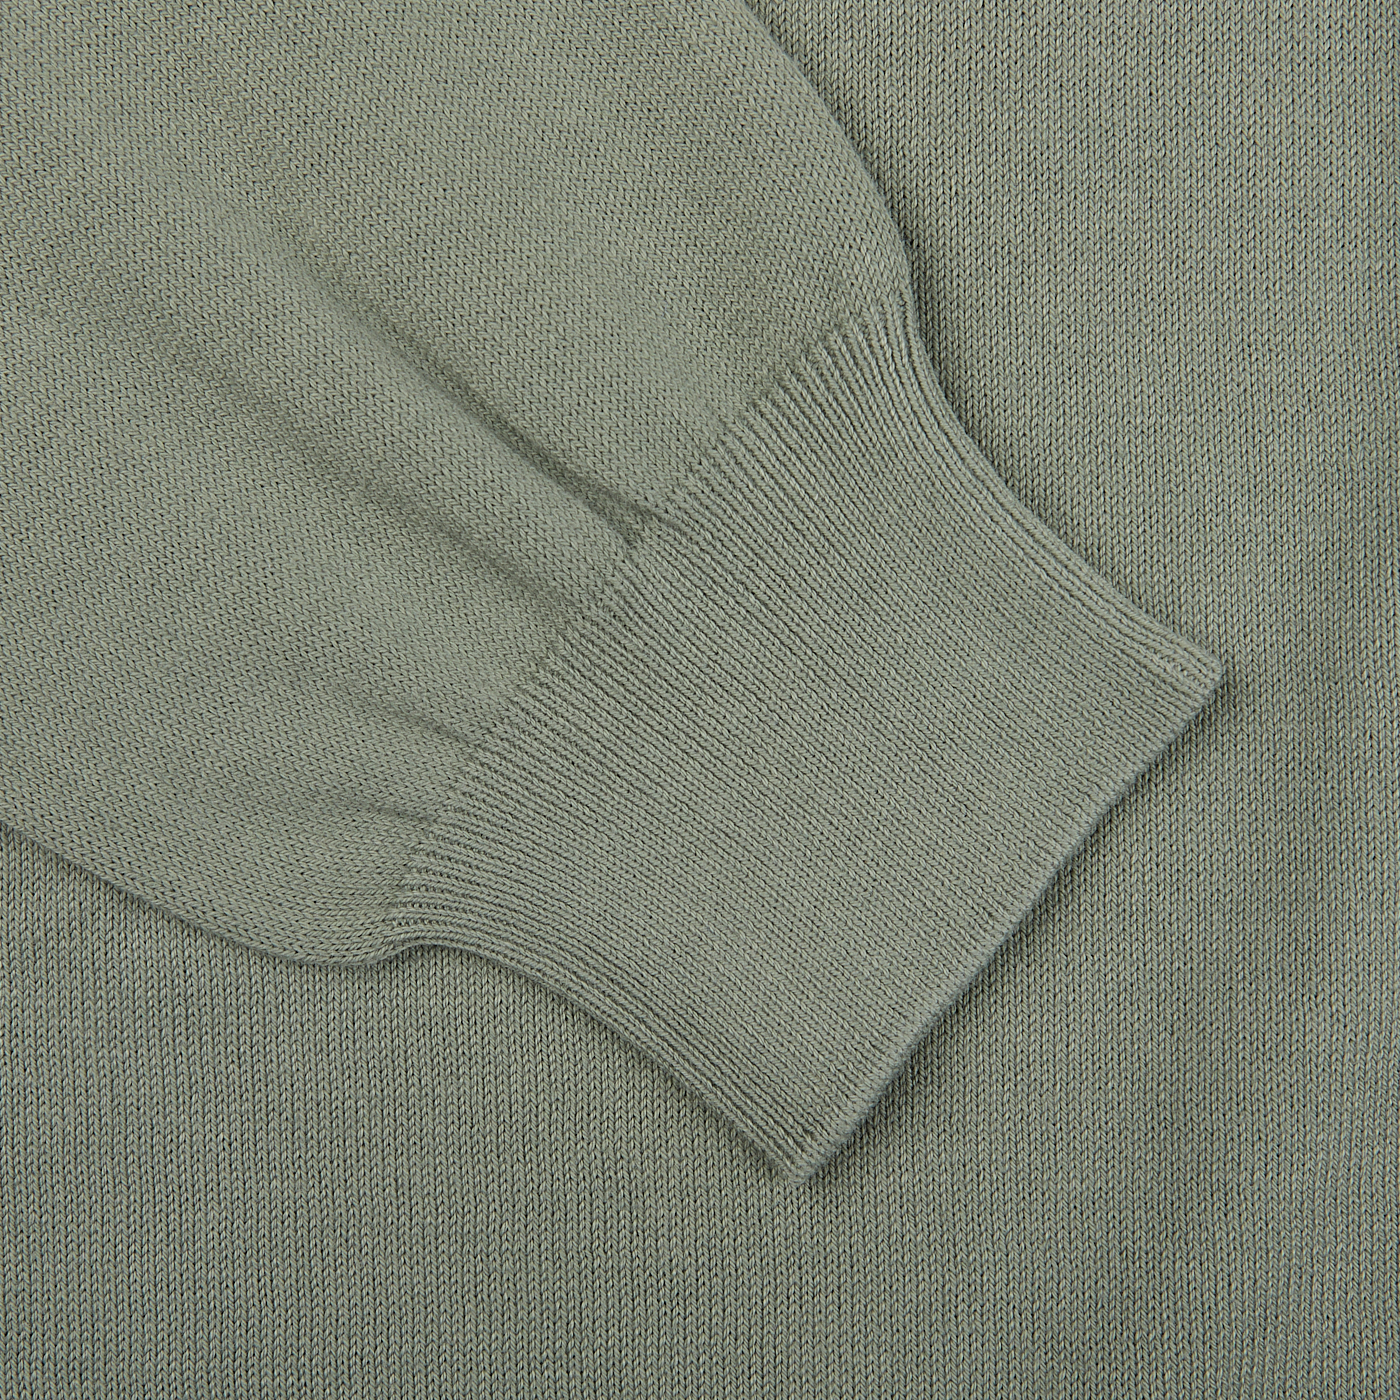 A close up of a Khaki Green Supima Cotton LS Polo Shirt by Mauro Ottaviani.